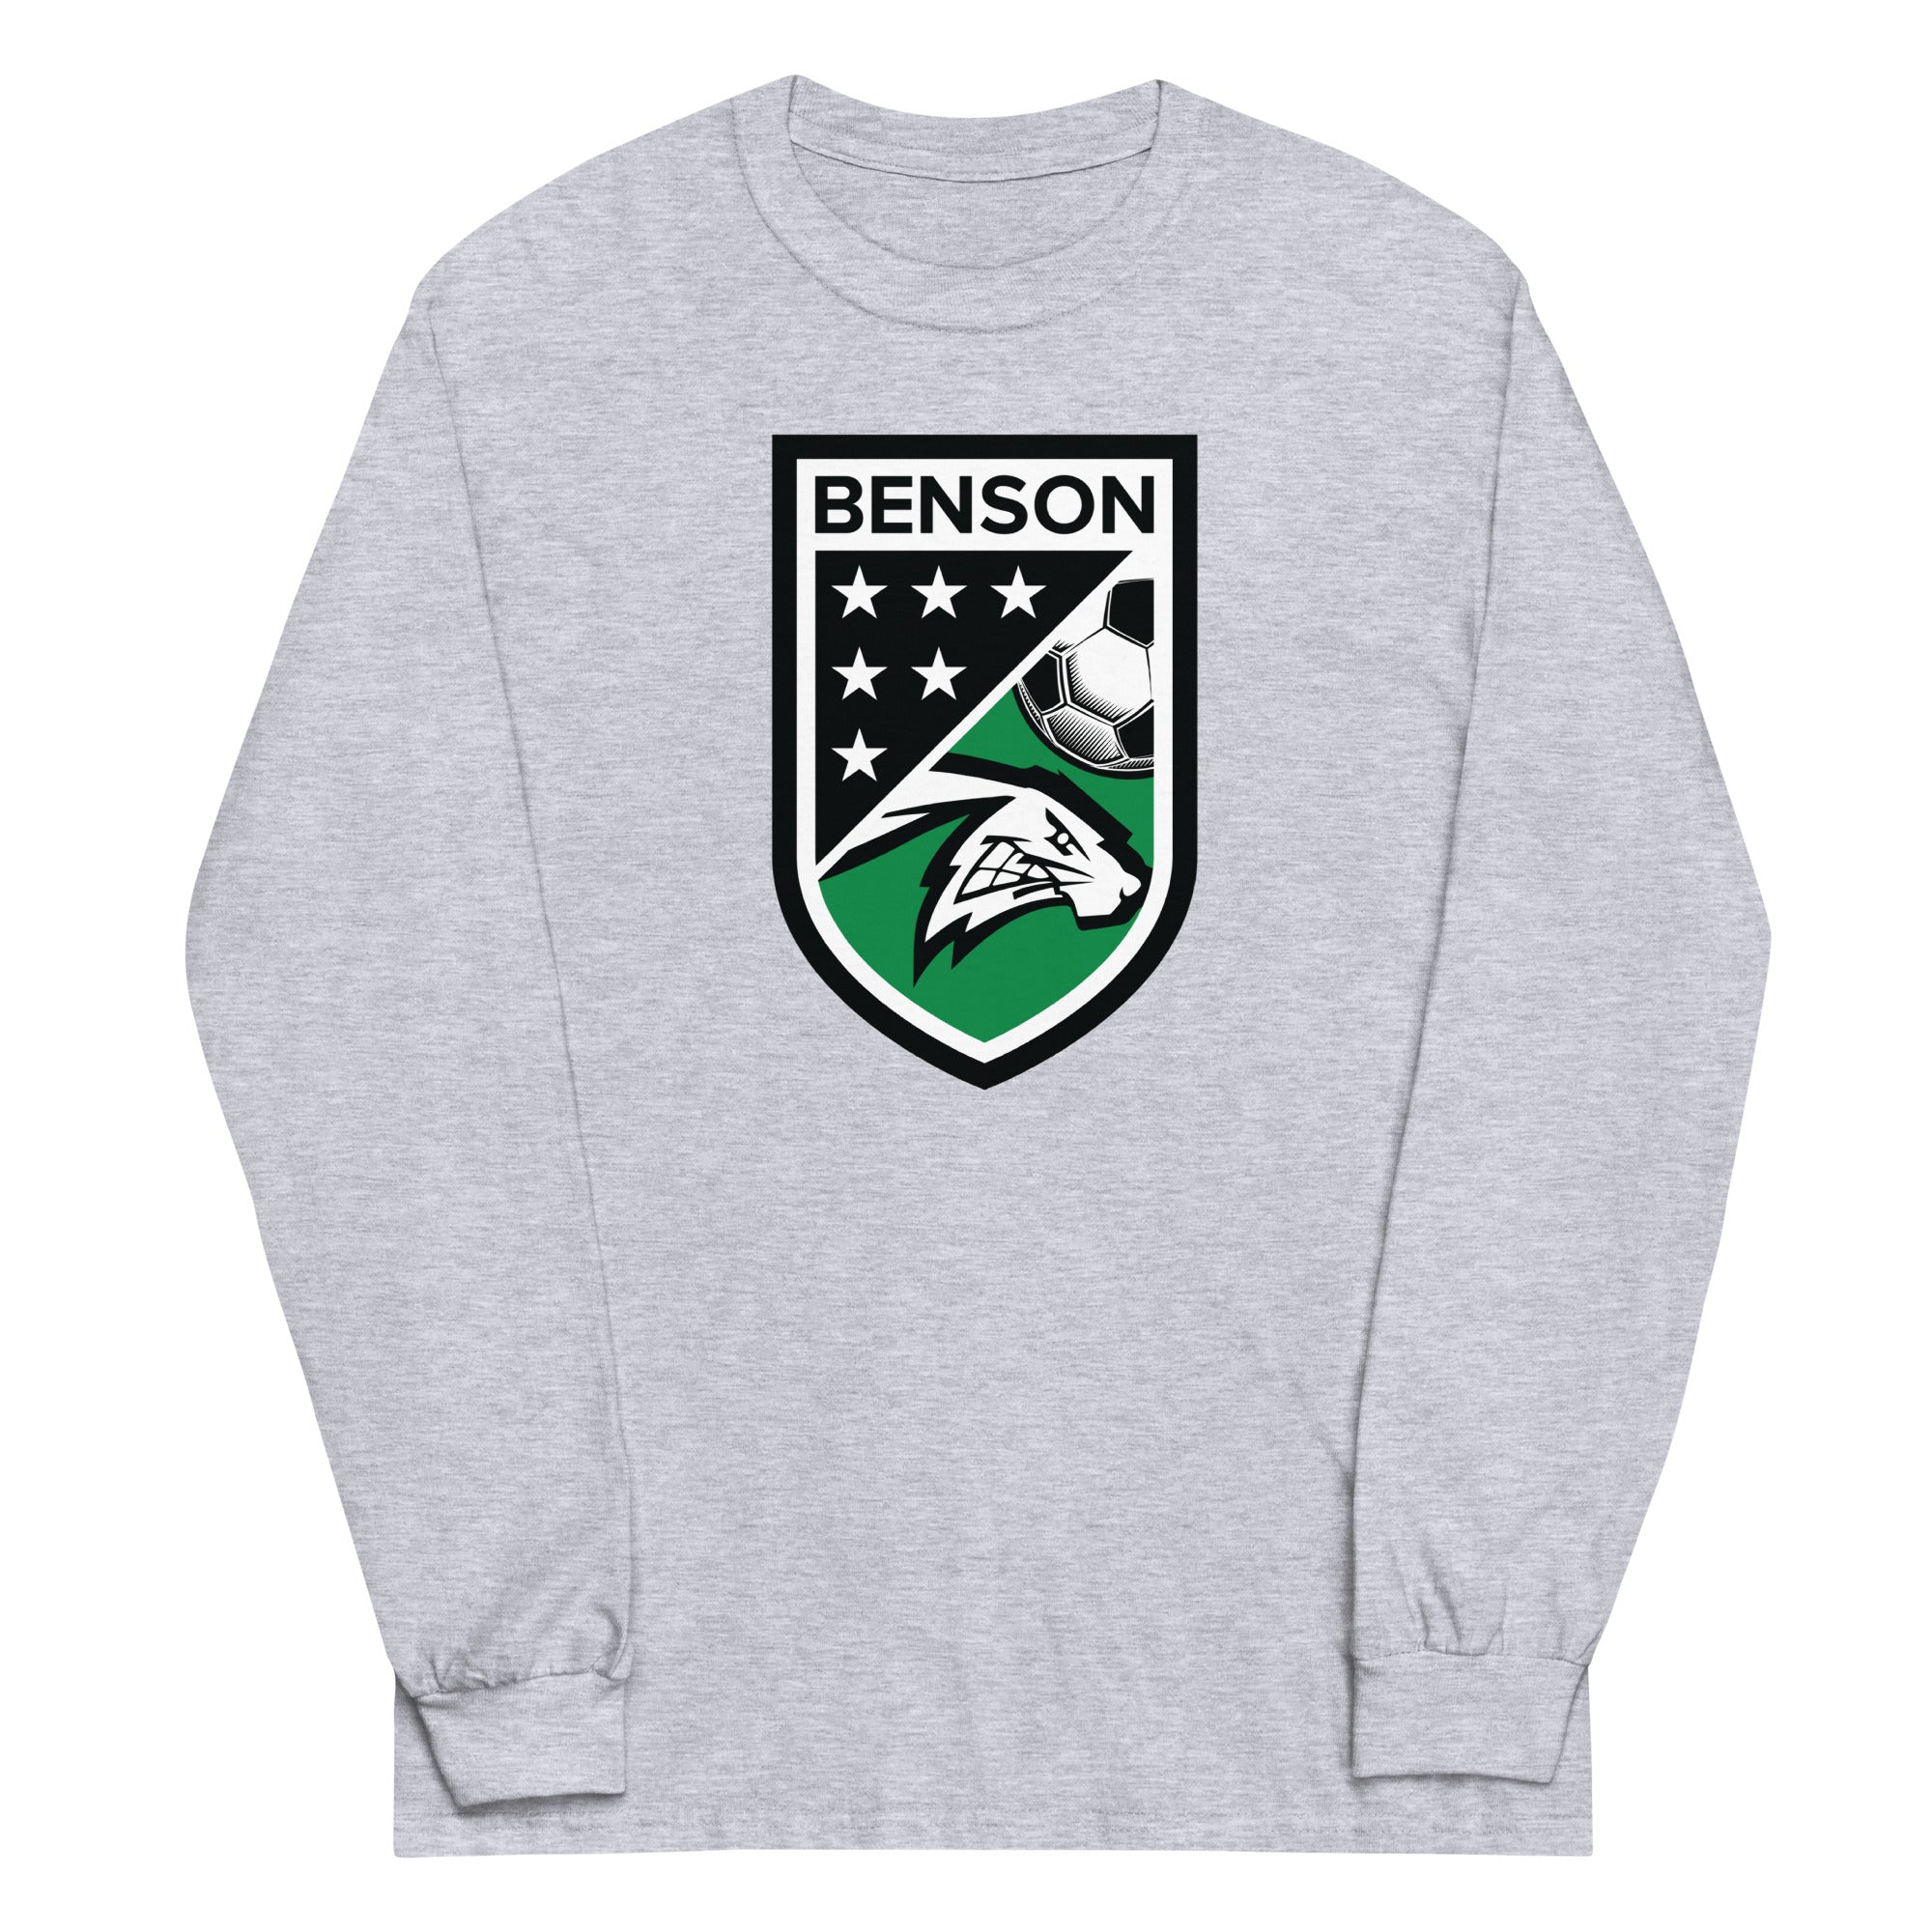 Benson Soccer Grey Mens Long Sleeve Shirt